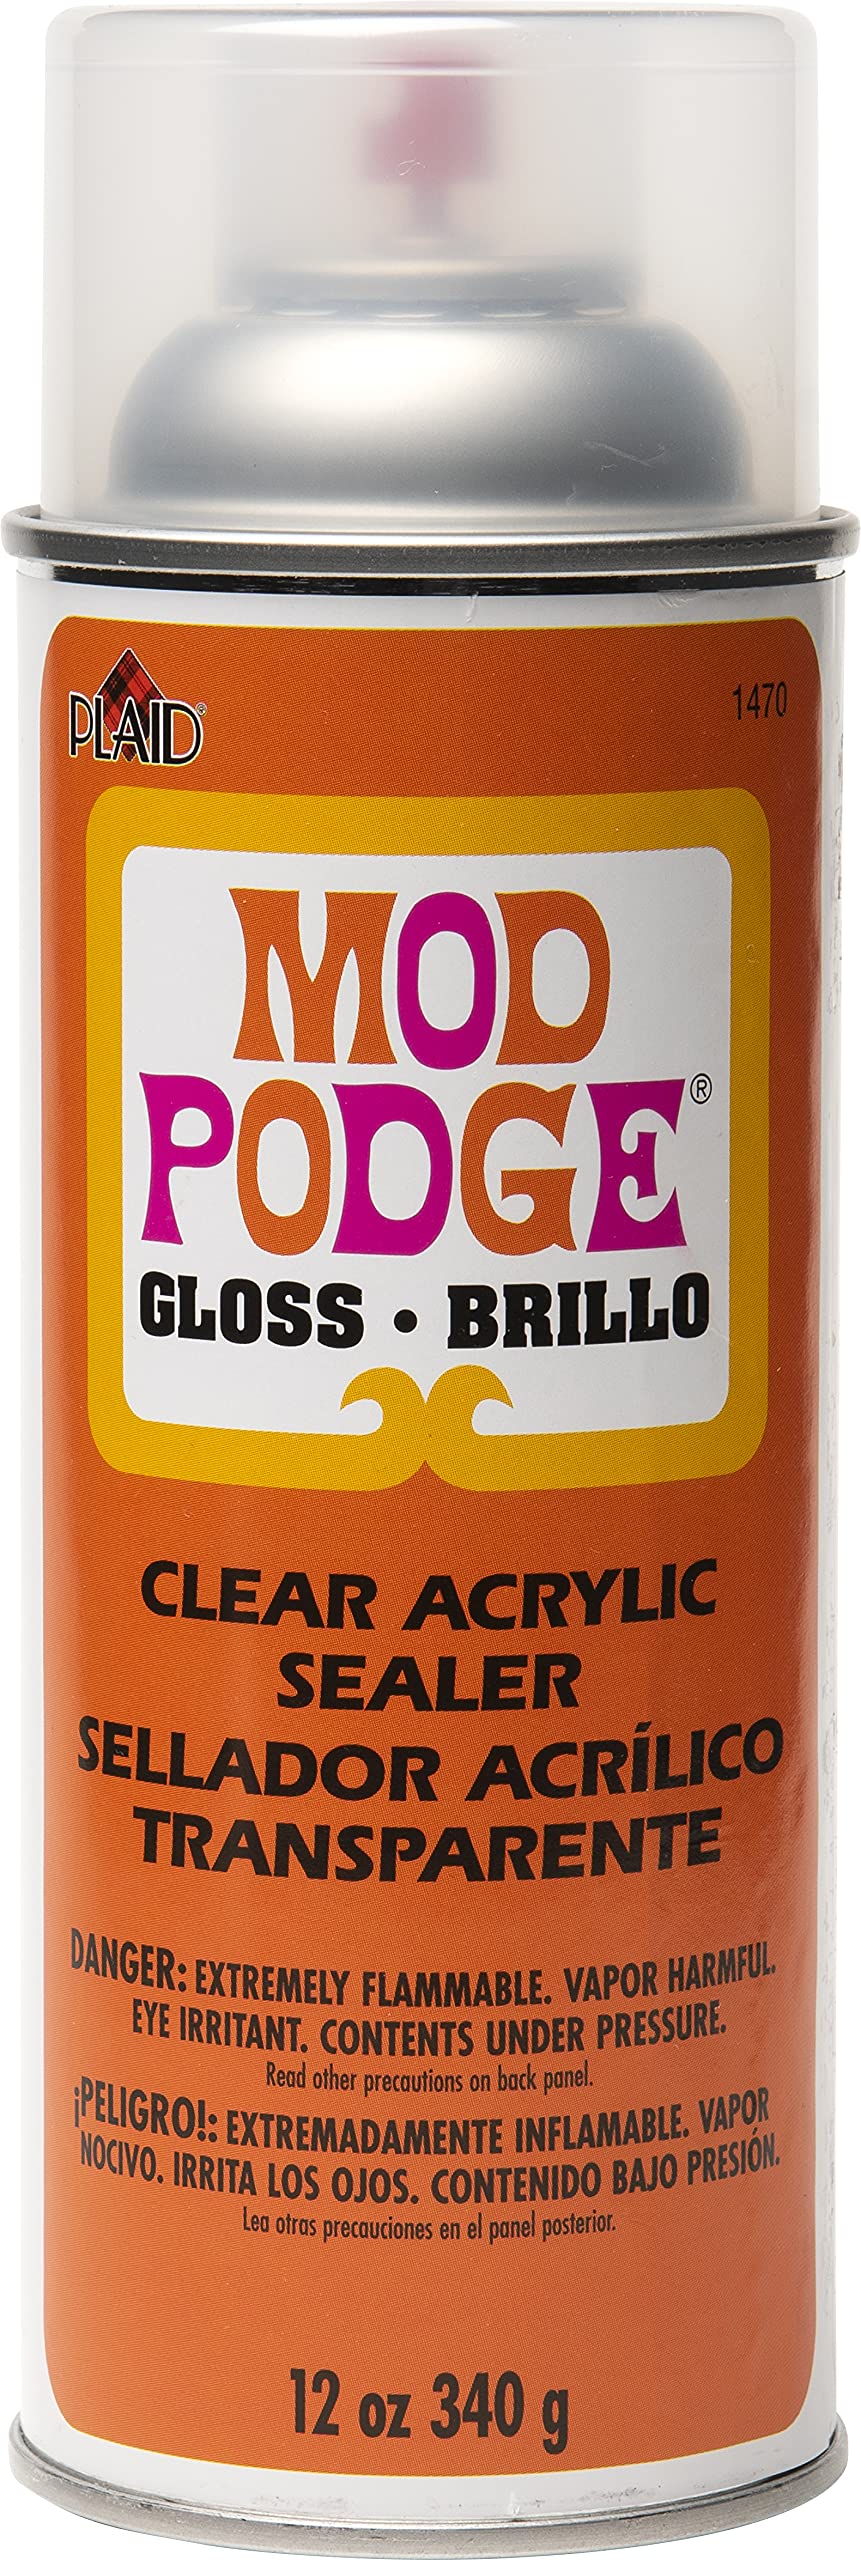  Mod Podge Iridescent Acrylic Spray Sealer, 8 oz